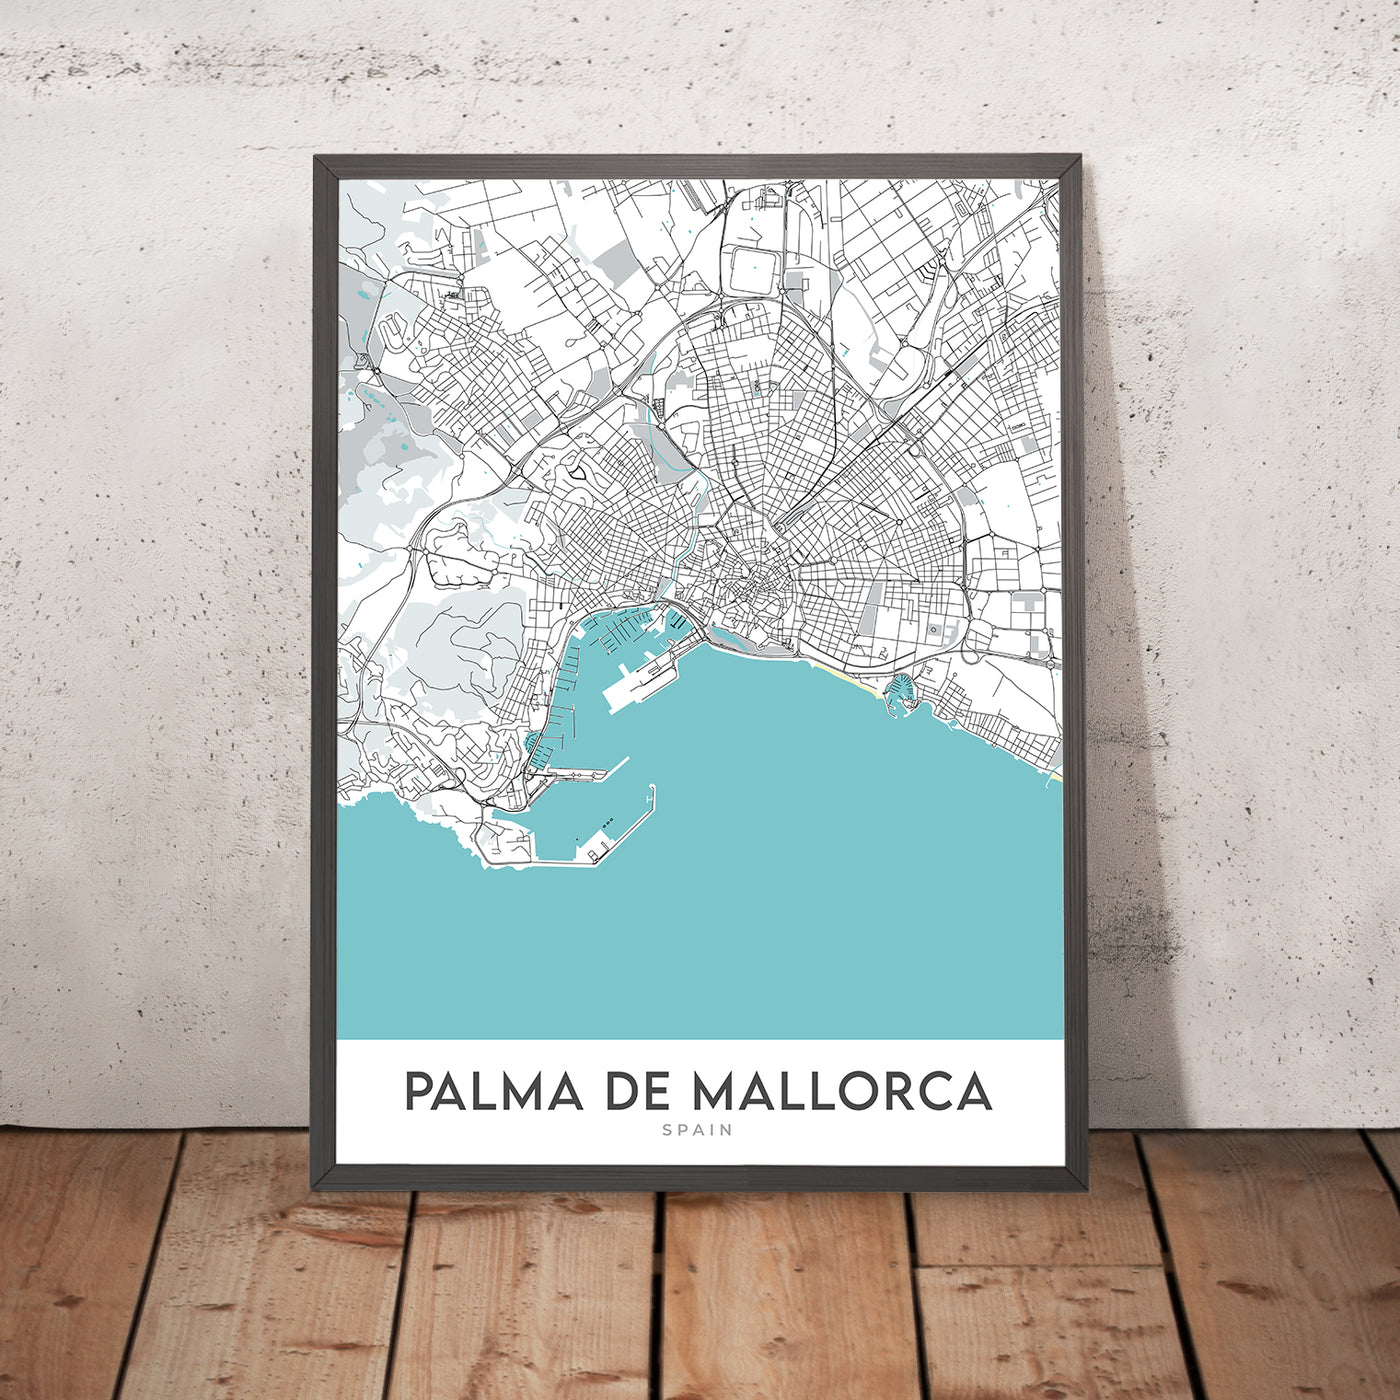 Modern City Map of Palma de Mallorca, Spain: Old Town, Santa Catalina, Paseo Maritimo